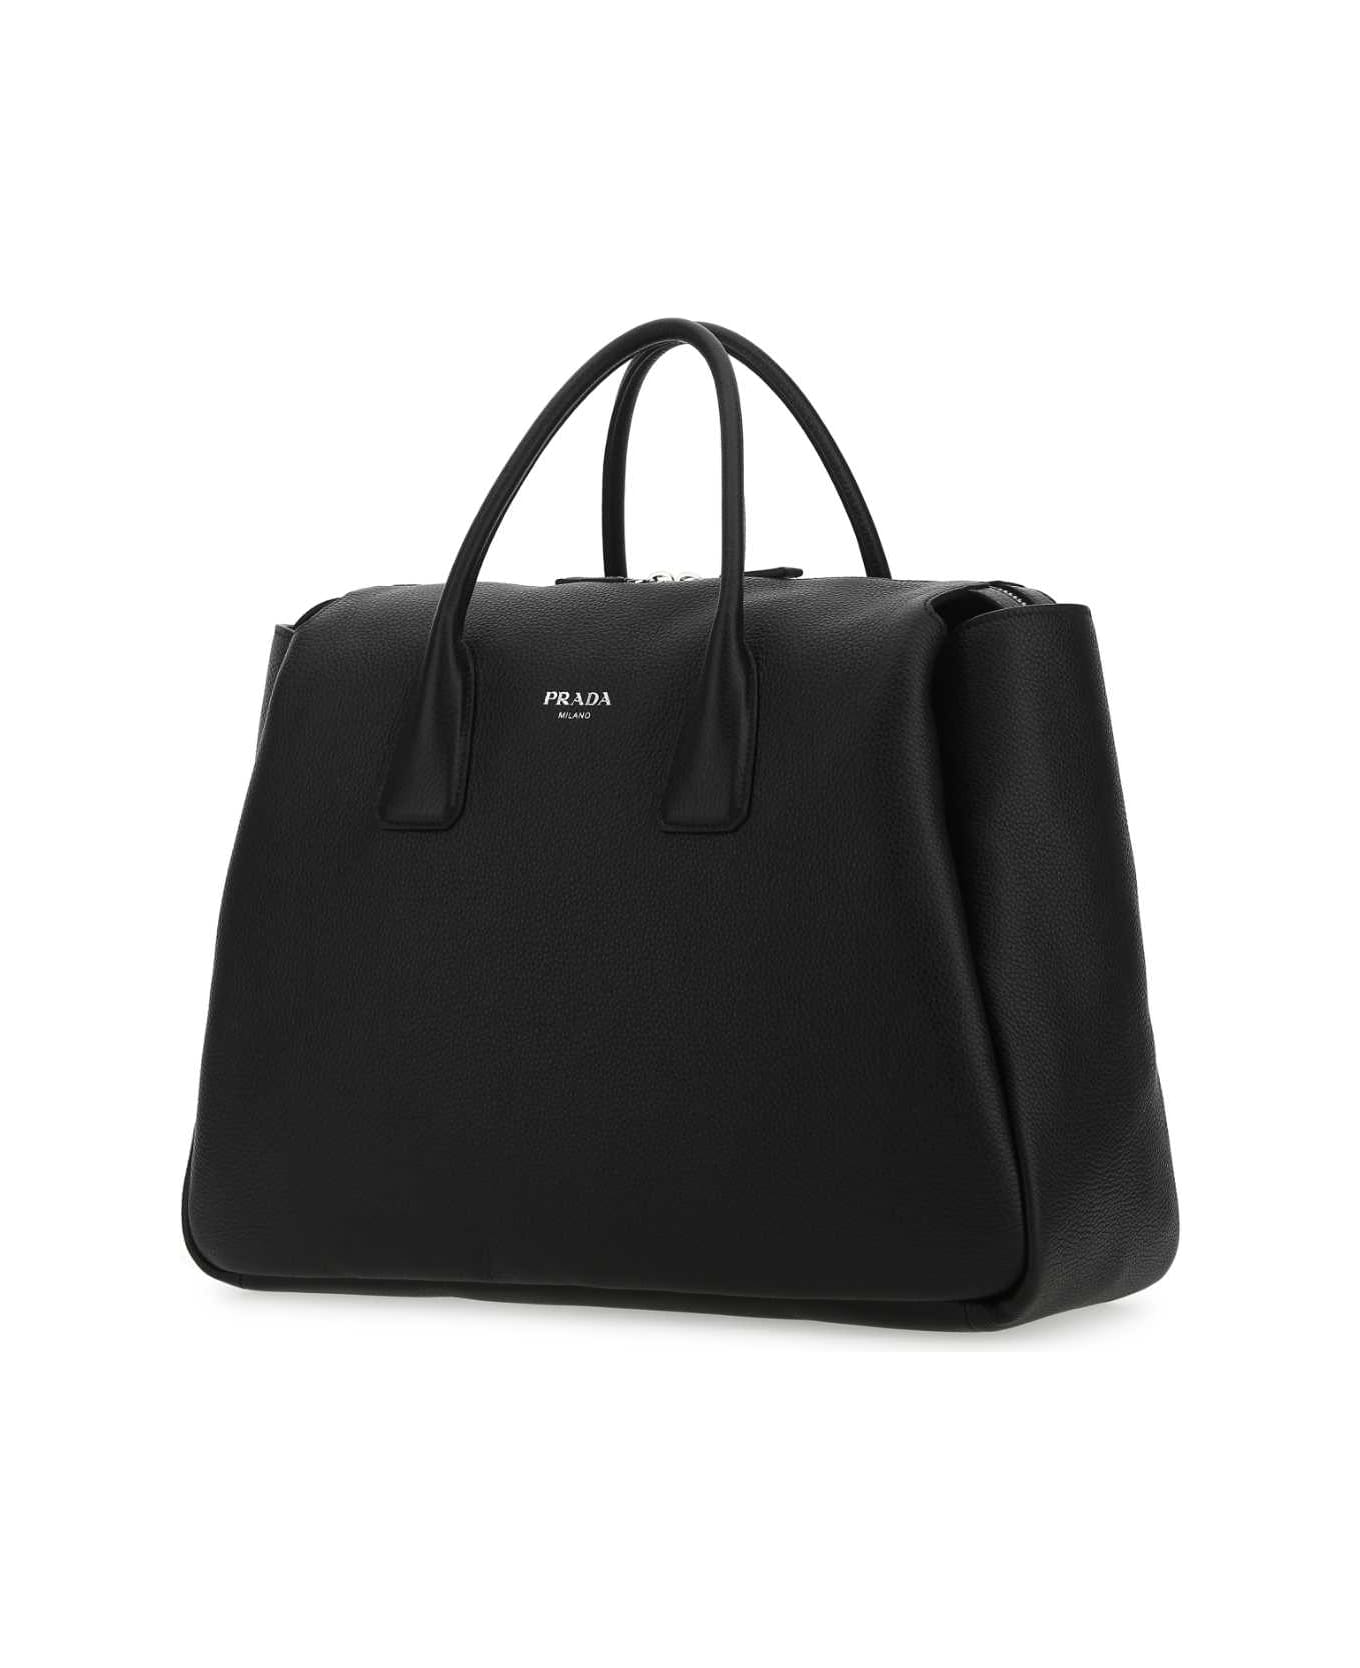 Prada Black Leather Travel Bag - F0002 トートバッグ